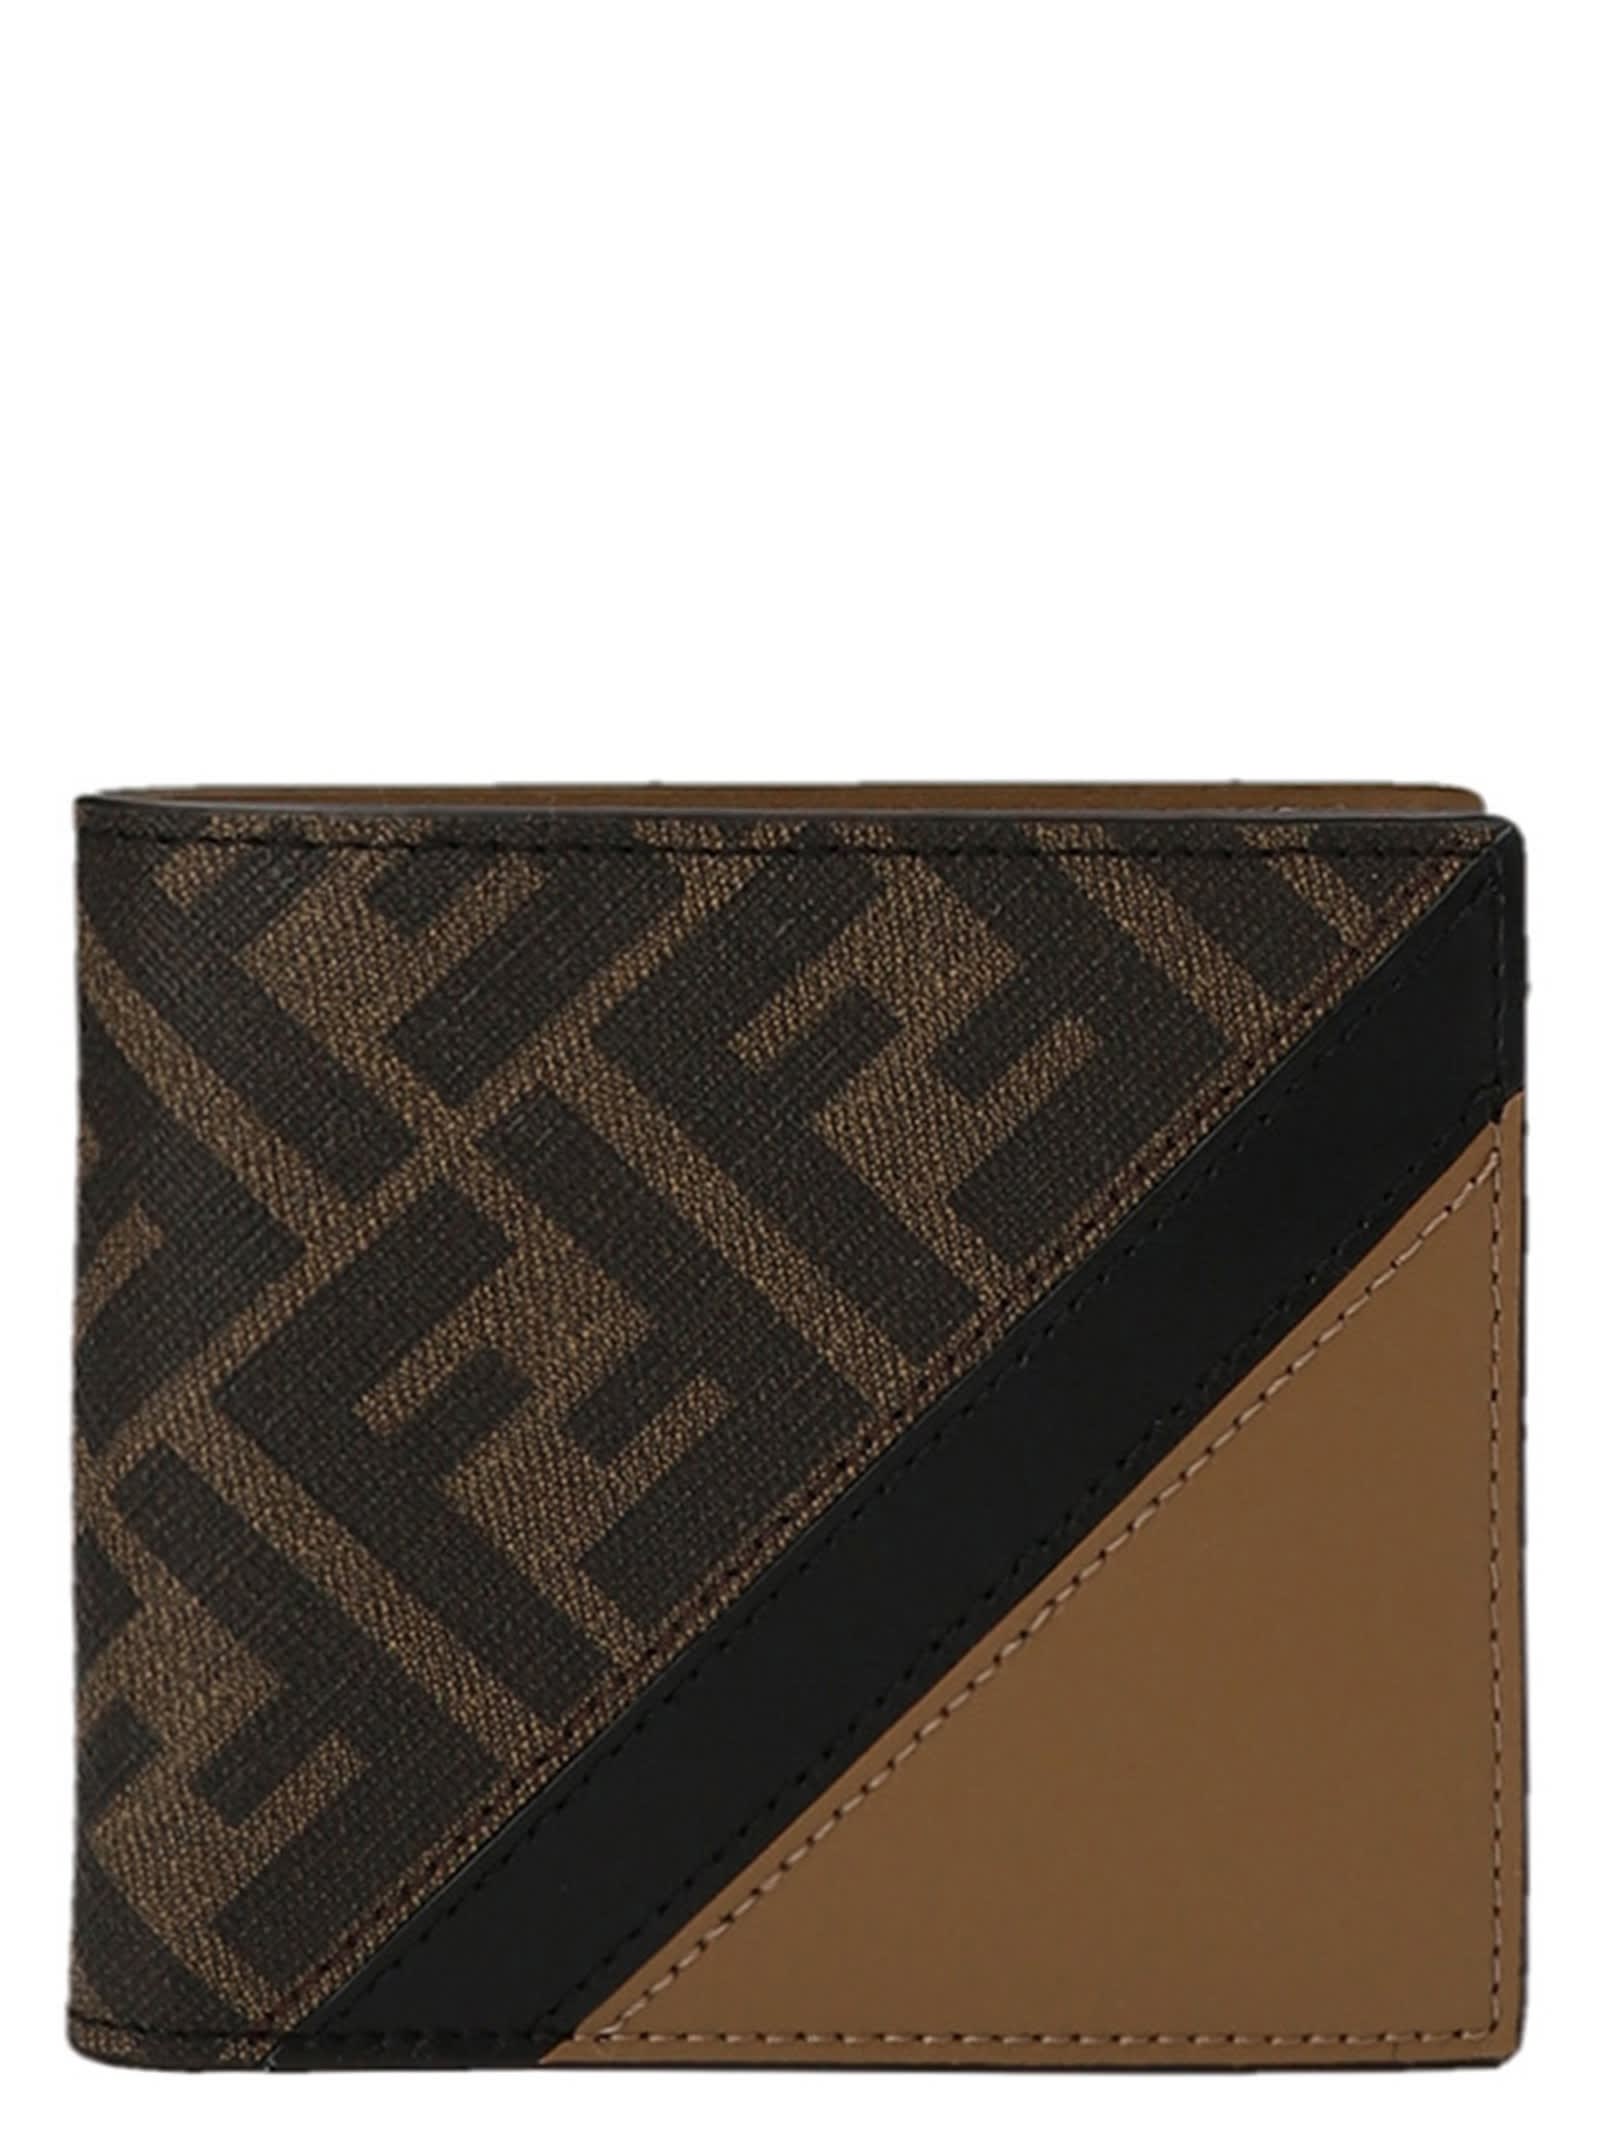 Fendi Leather Wallet In Brown